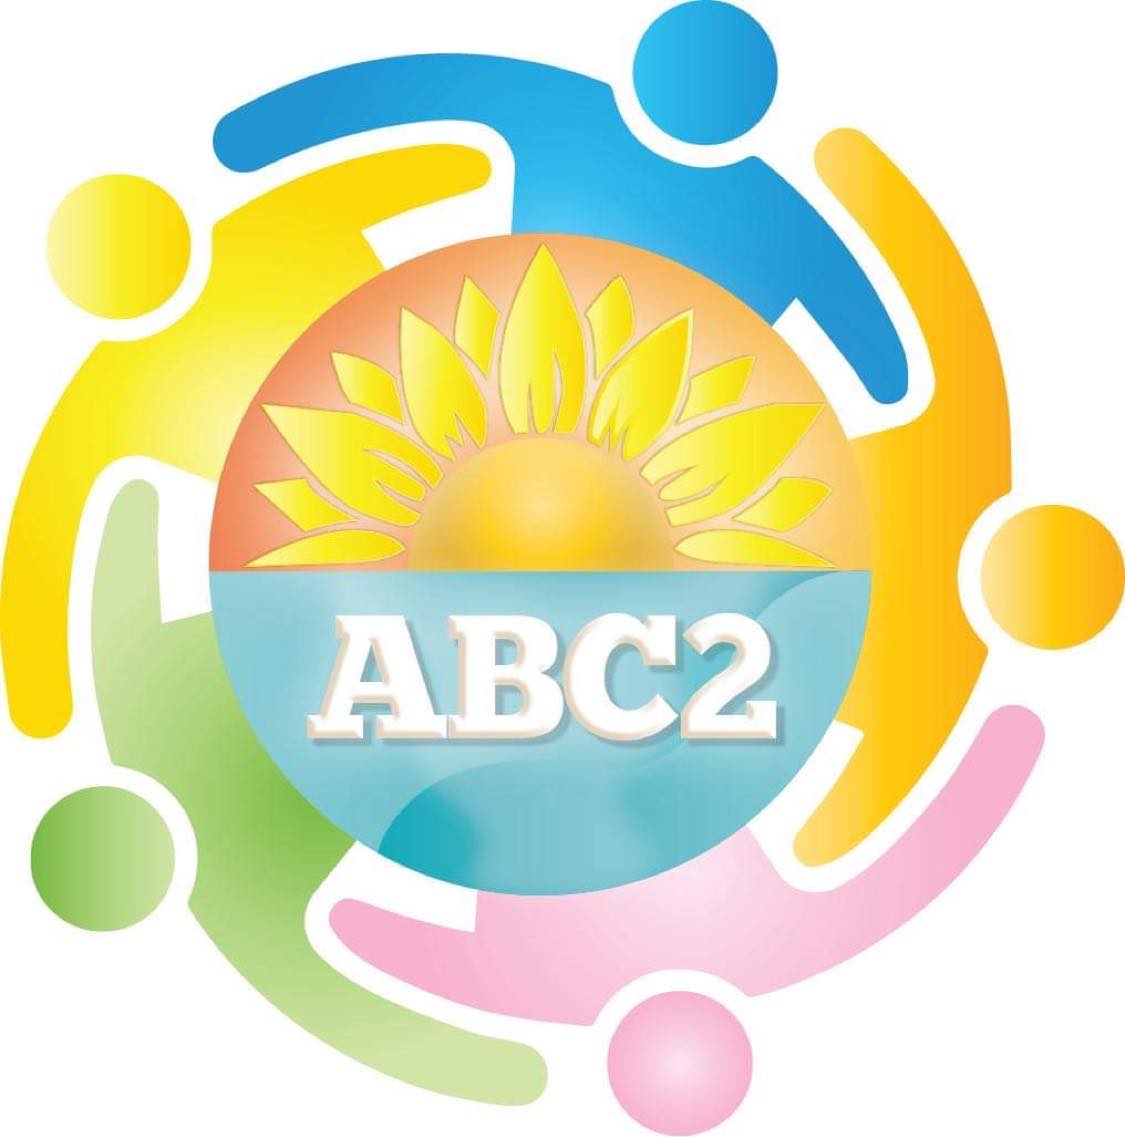 ABC2 Foundation